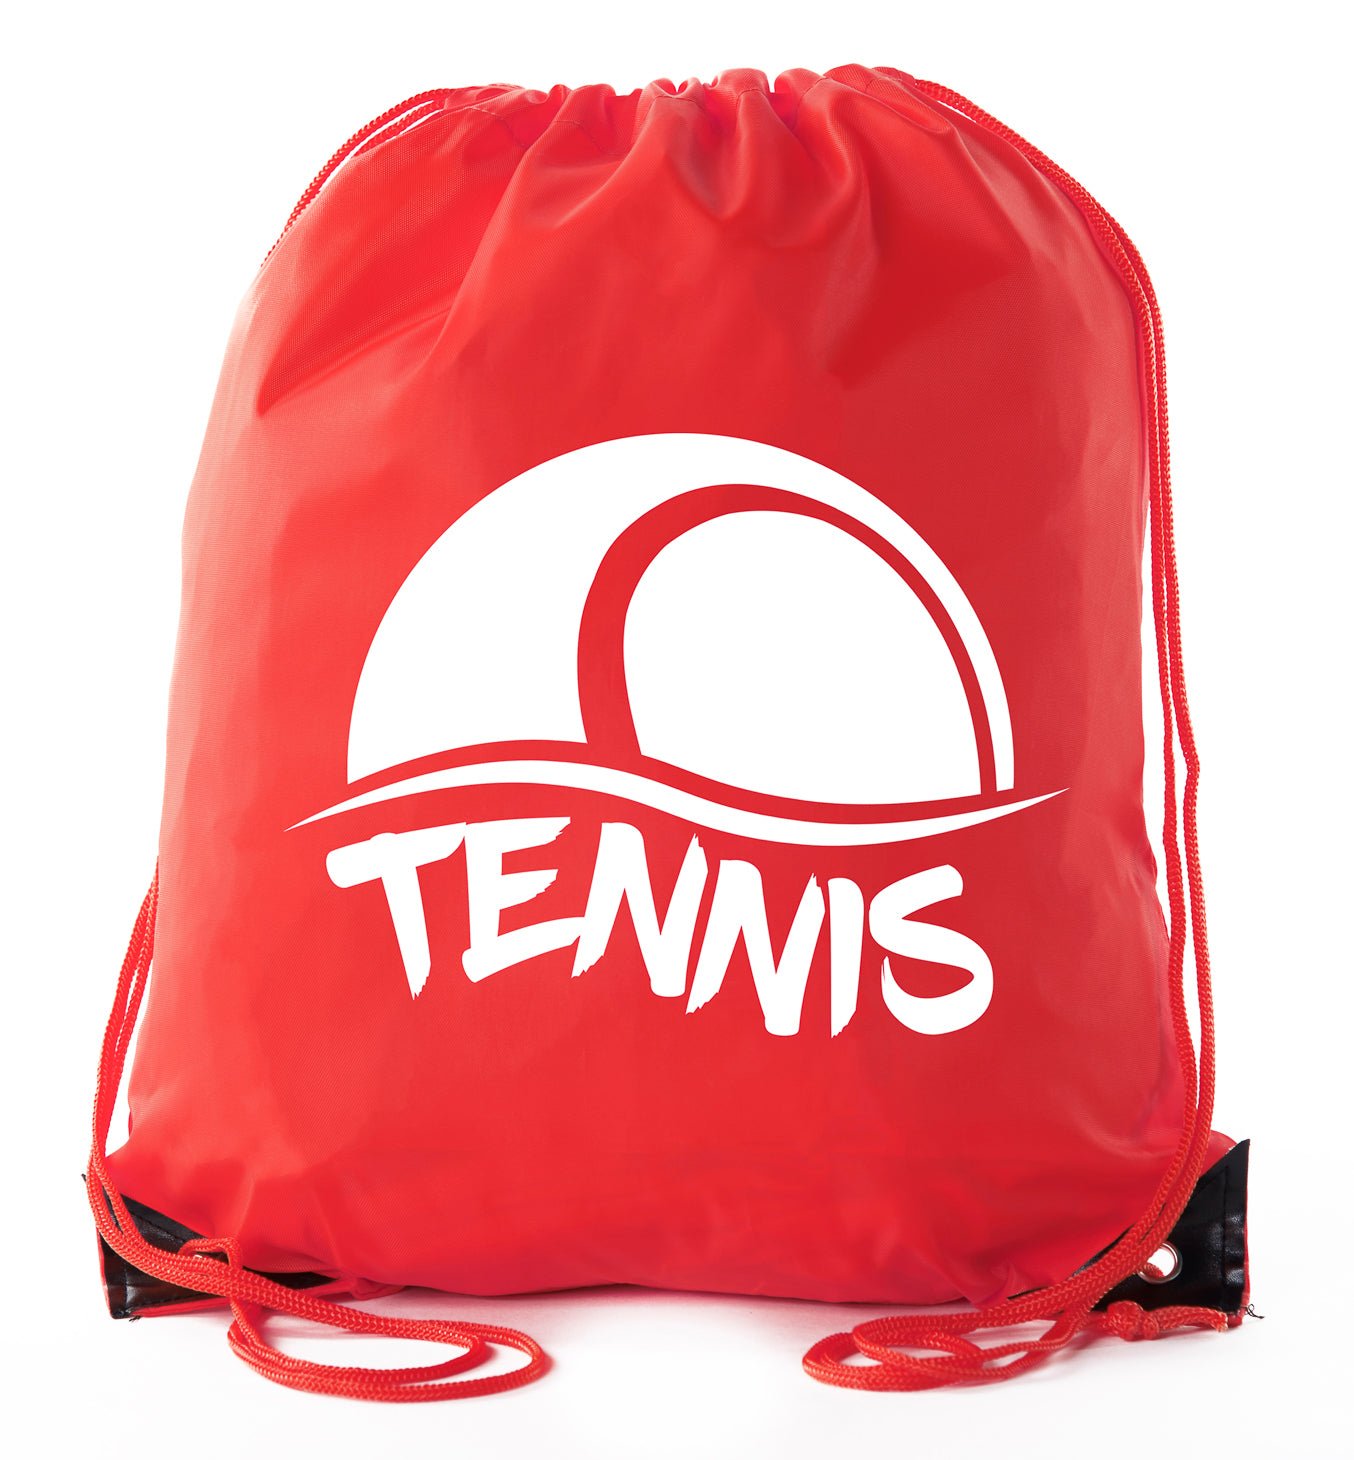 Tennis Ball Polyester Drawstring Bag - Mato & Hash